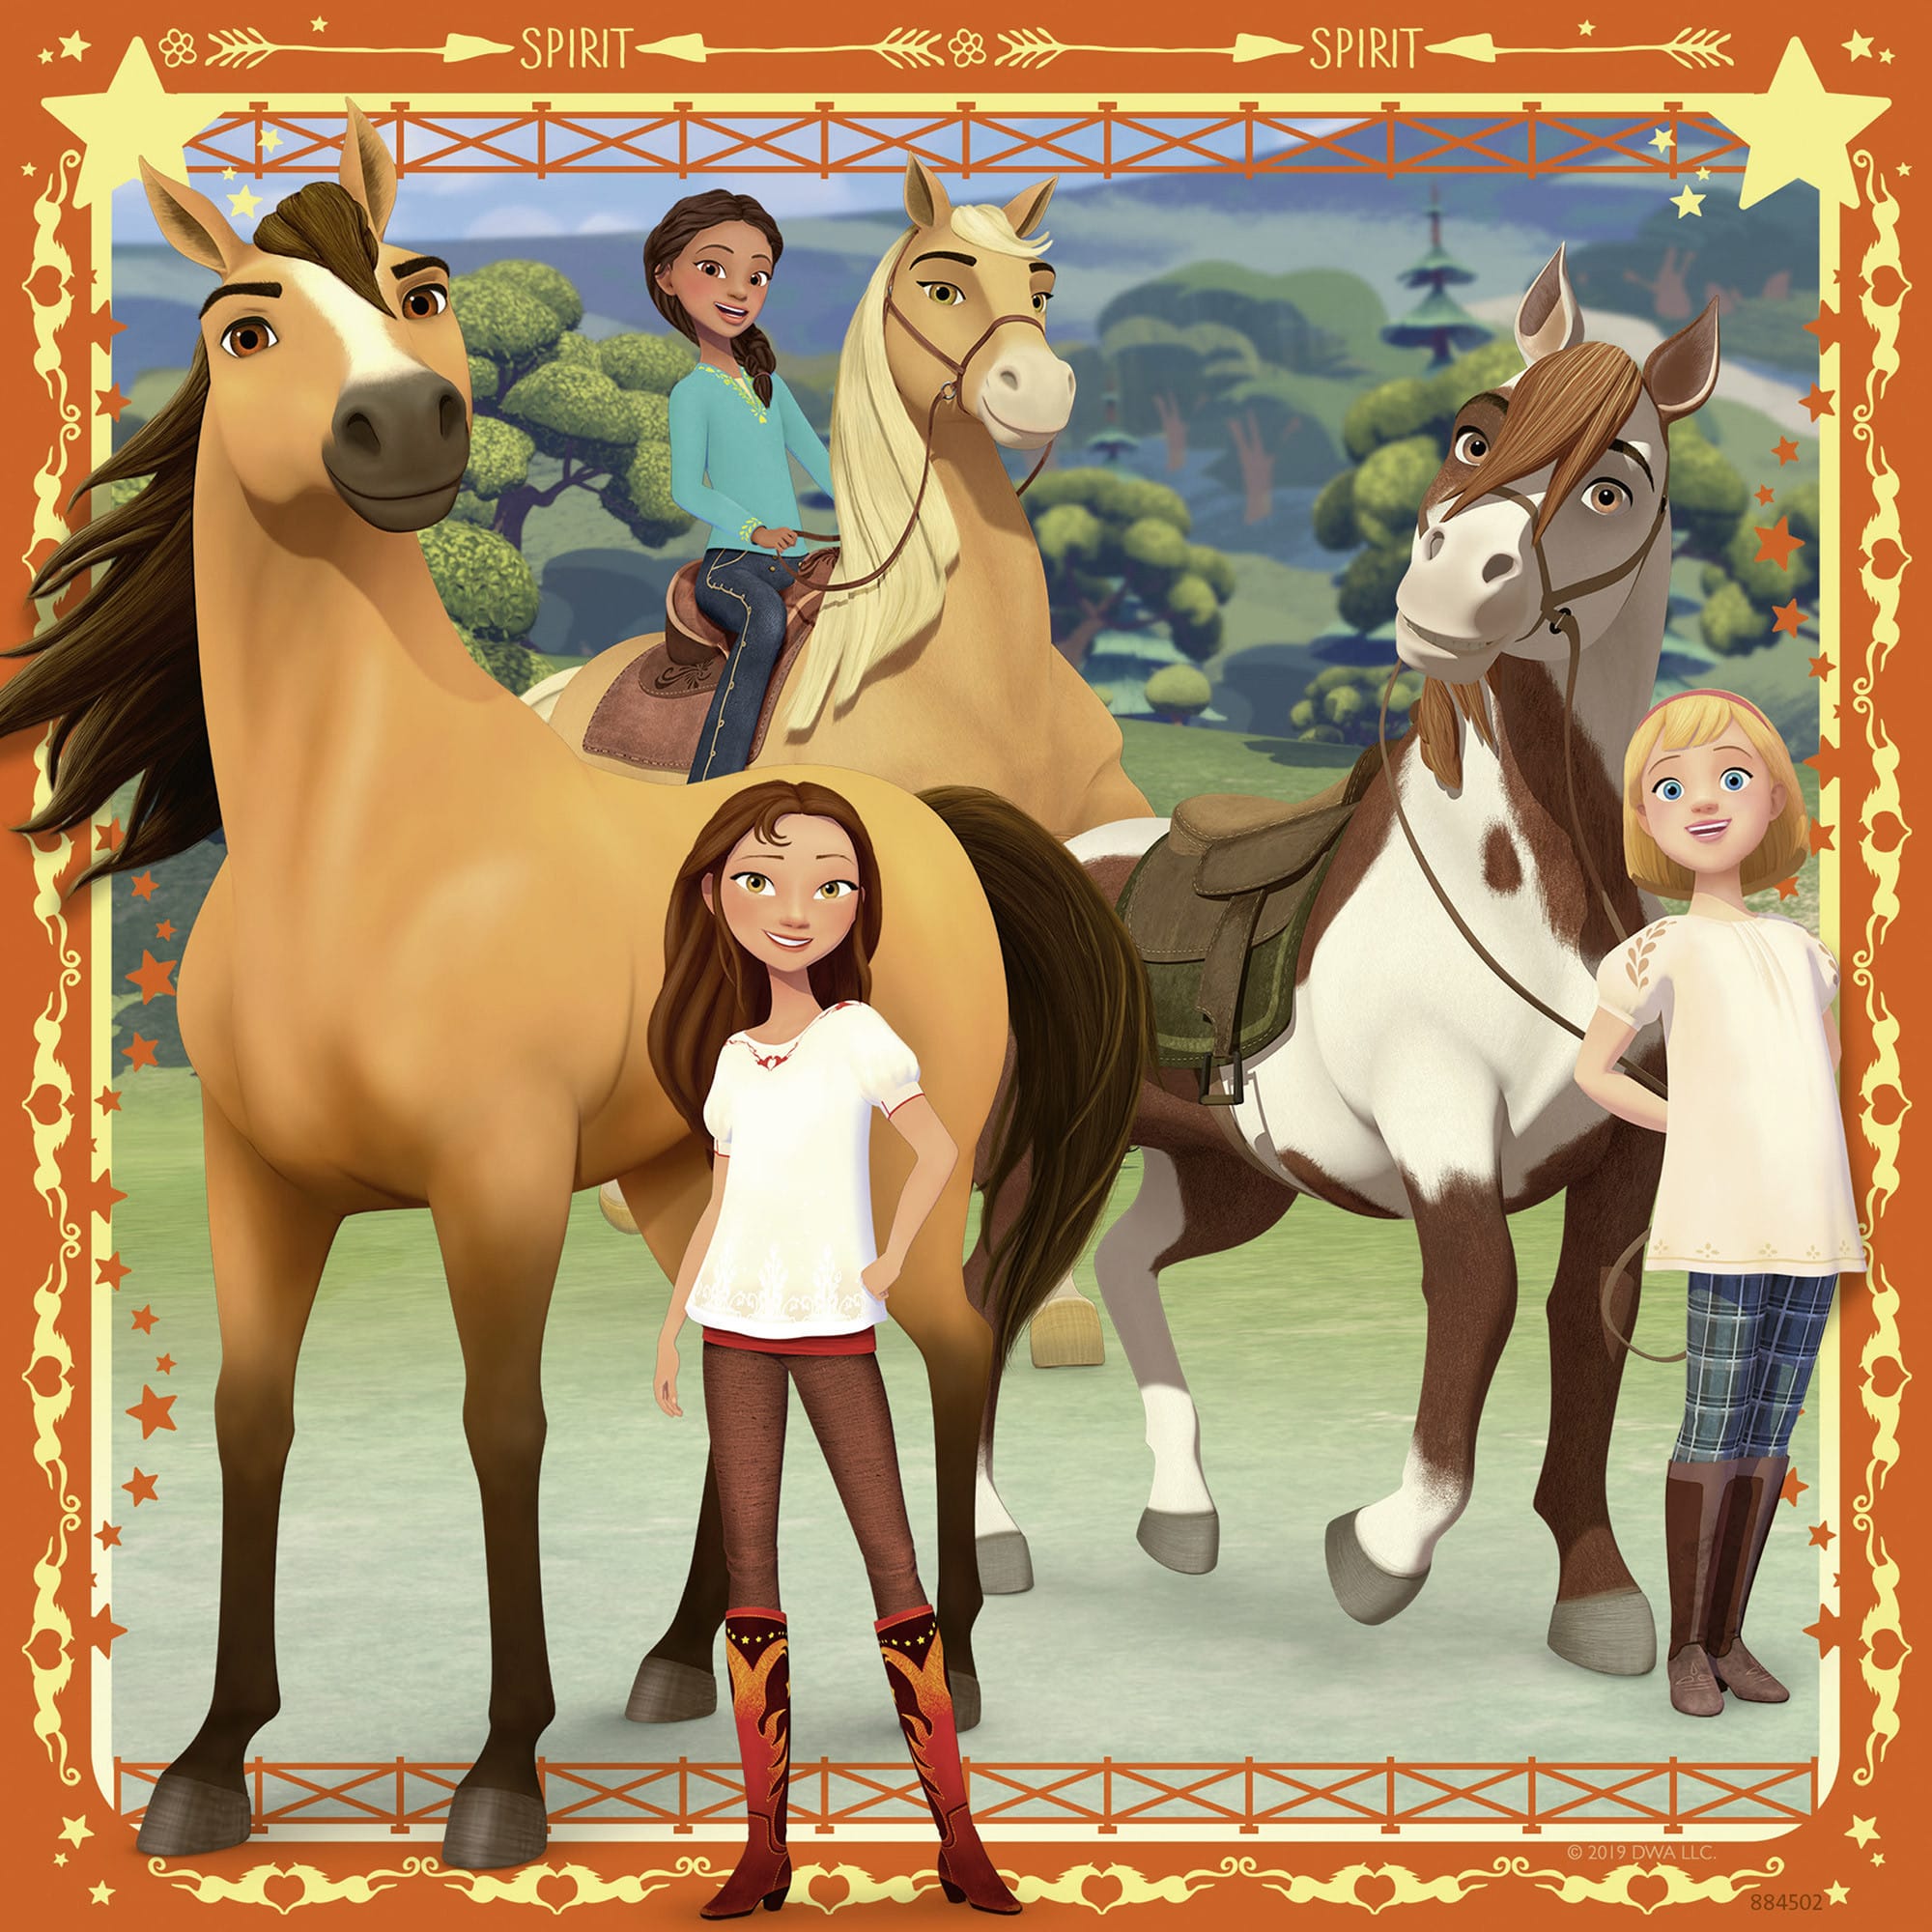 Ravensburger - Spirit Adventure on Horses Puzzles - 3 X 49 Pieces